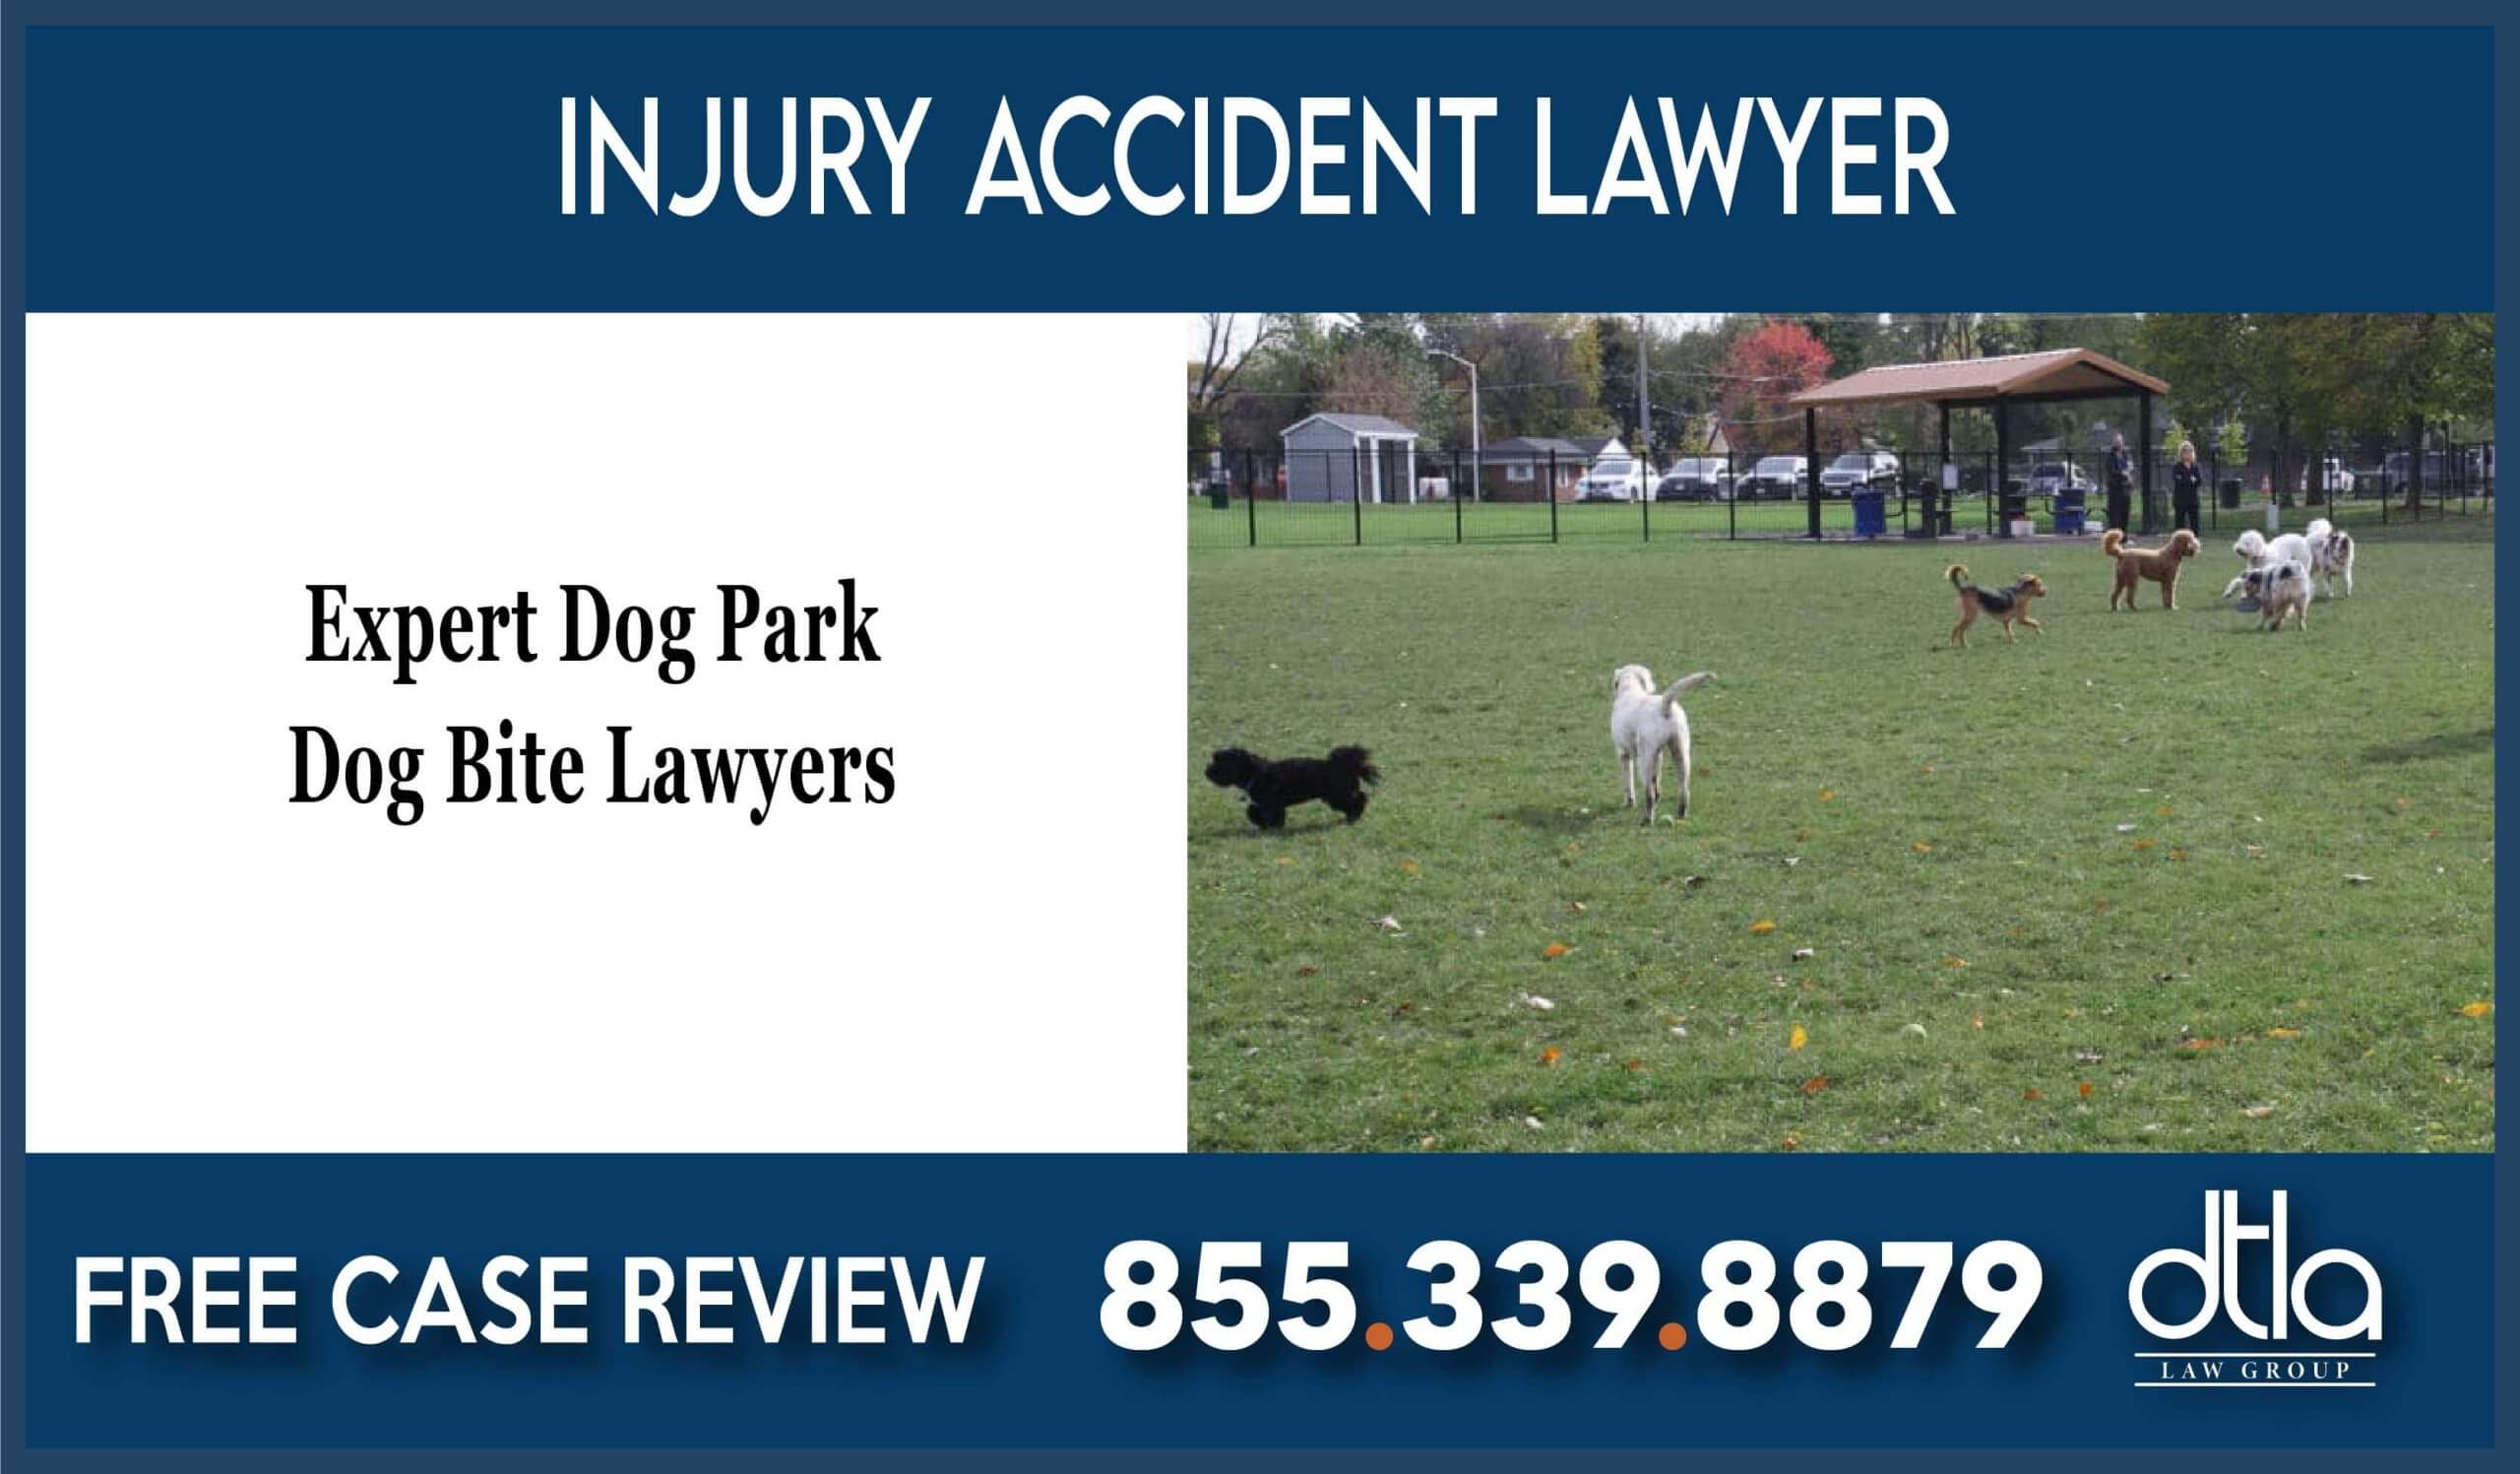 Expert Dog Park Dog Bite Lawyers lawsuit compensation liabiltiy attorney sue incident injury